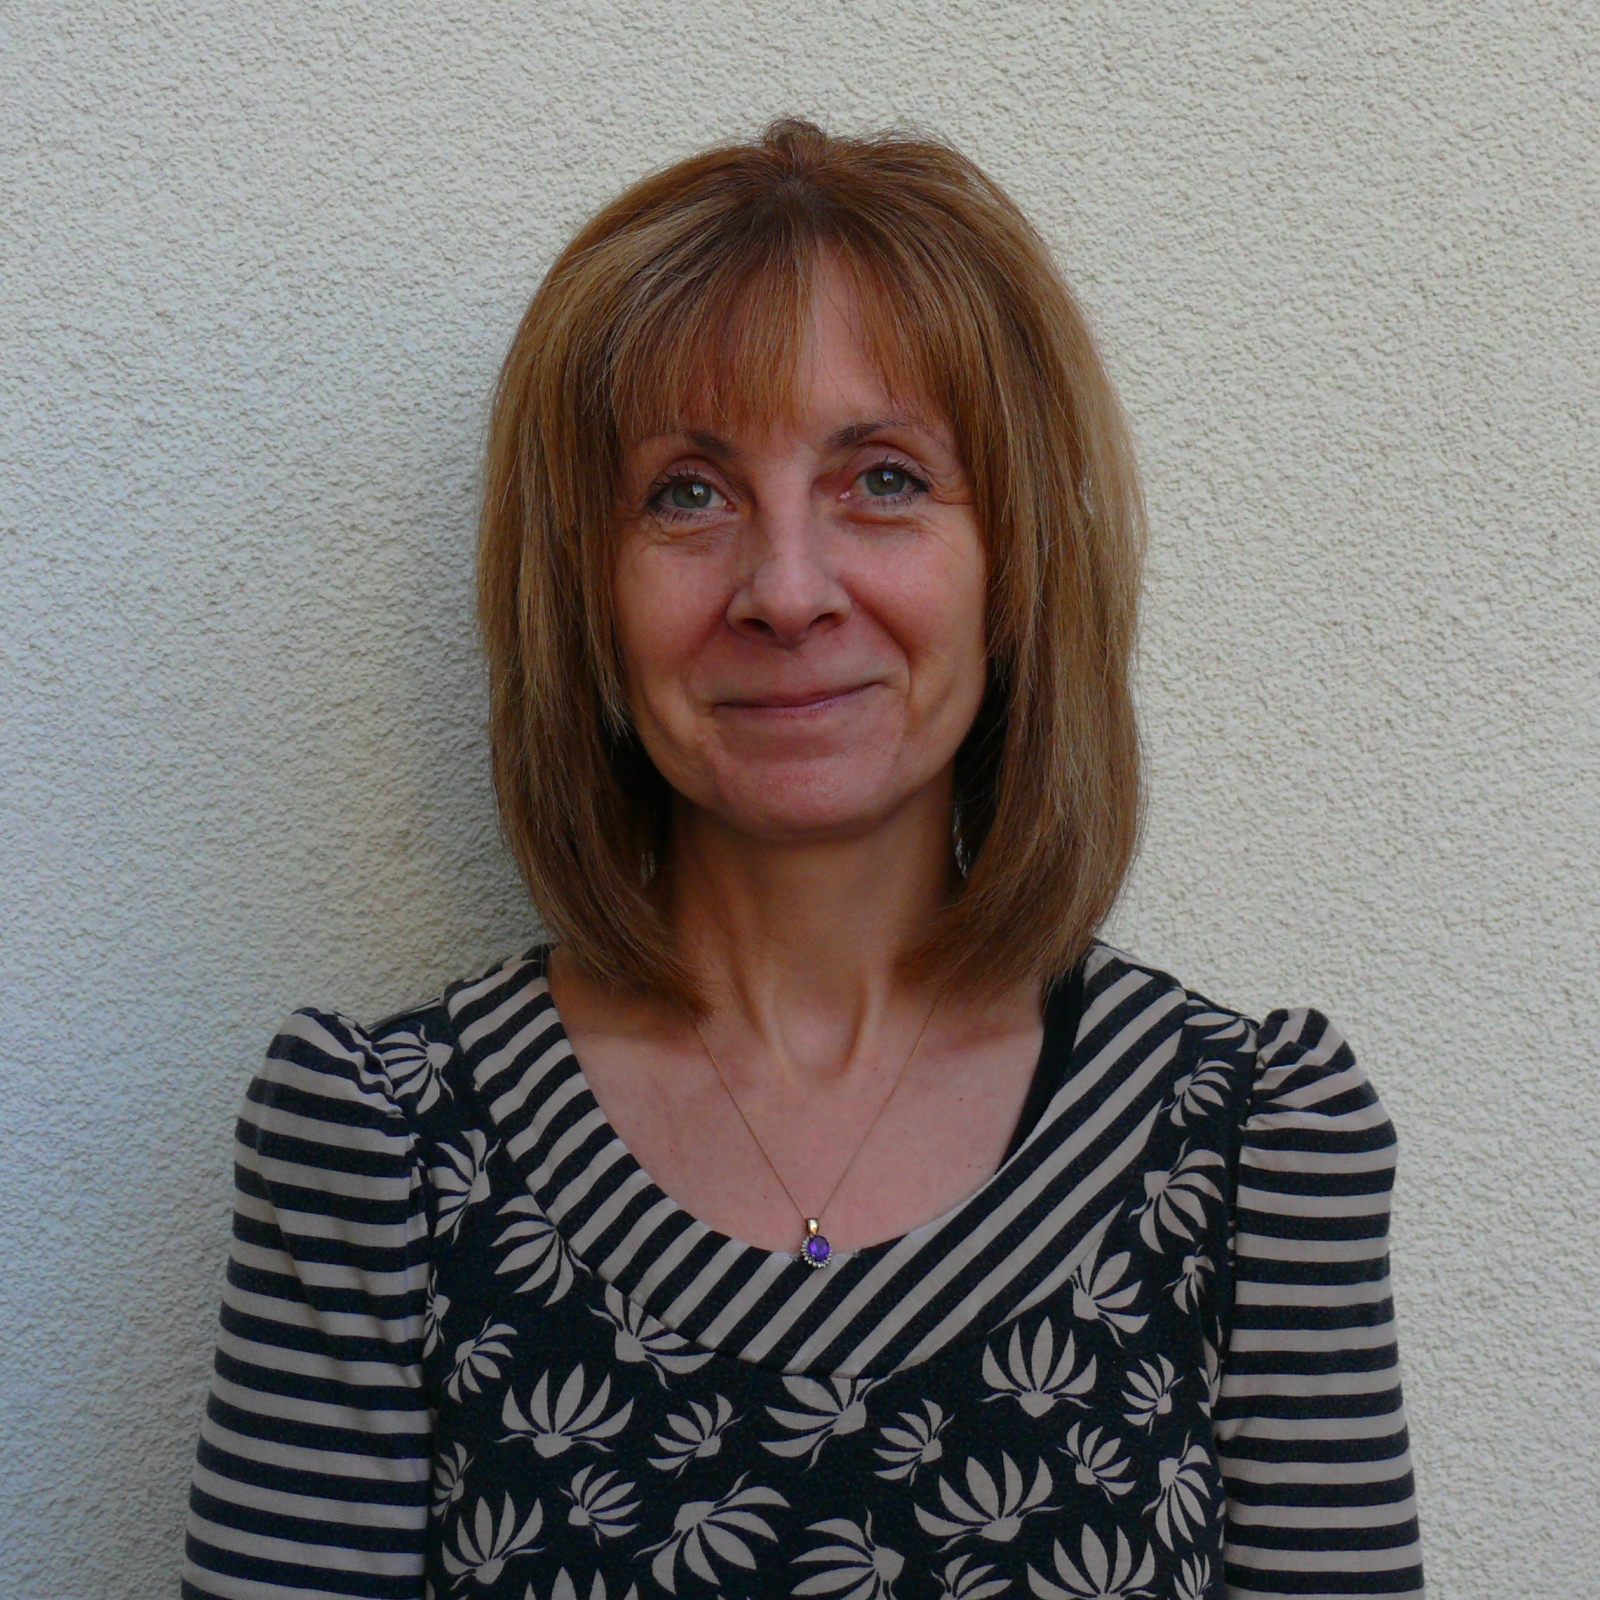 Debi Ford: Senior Histology Technician (Headshot)